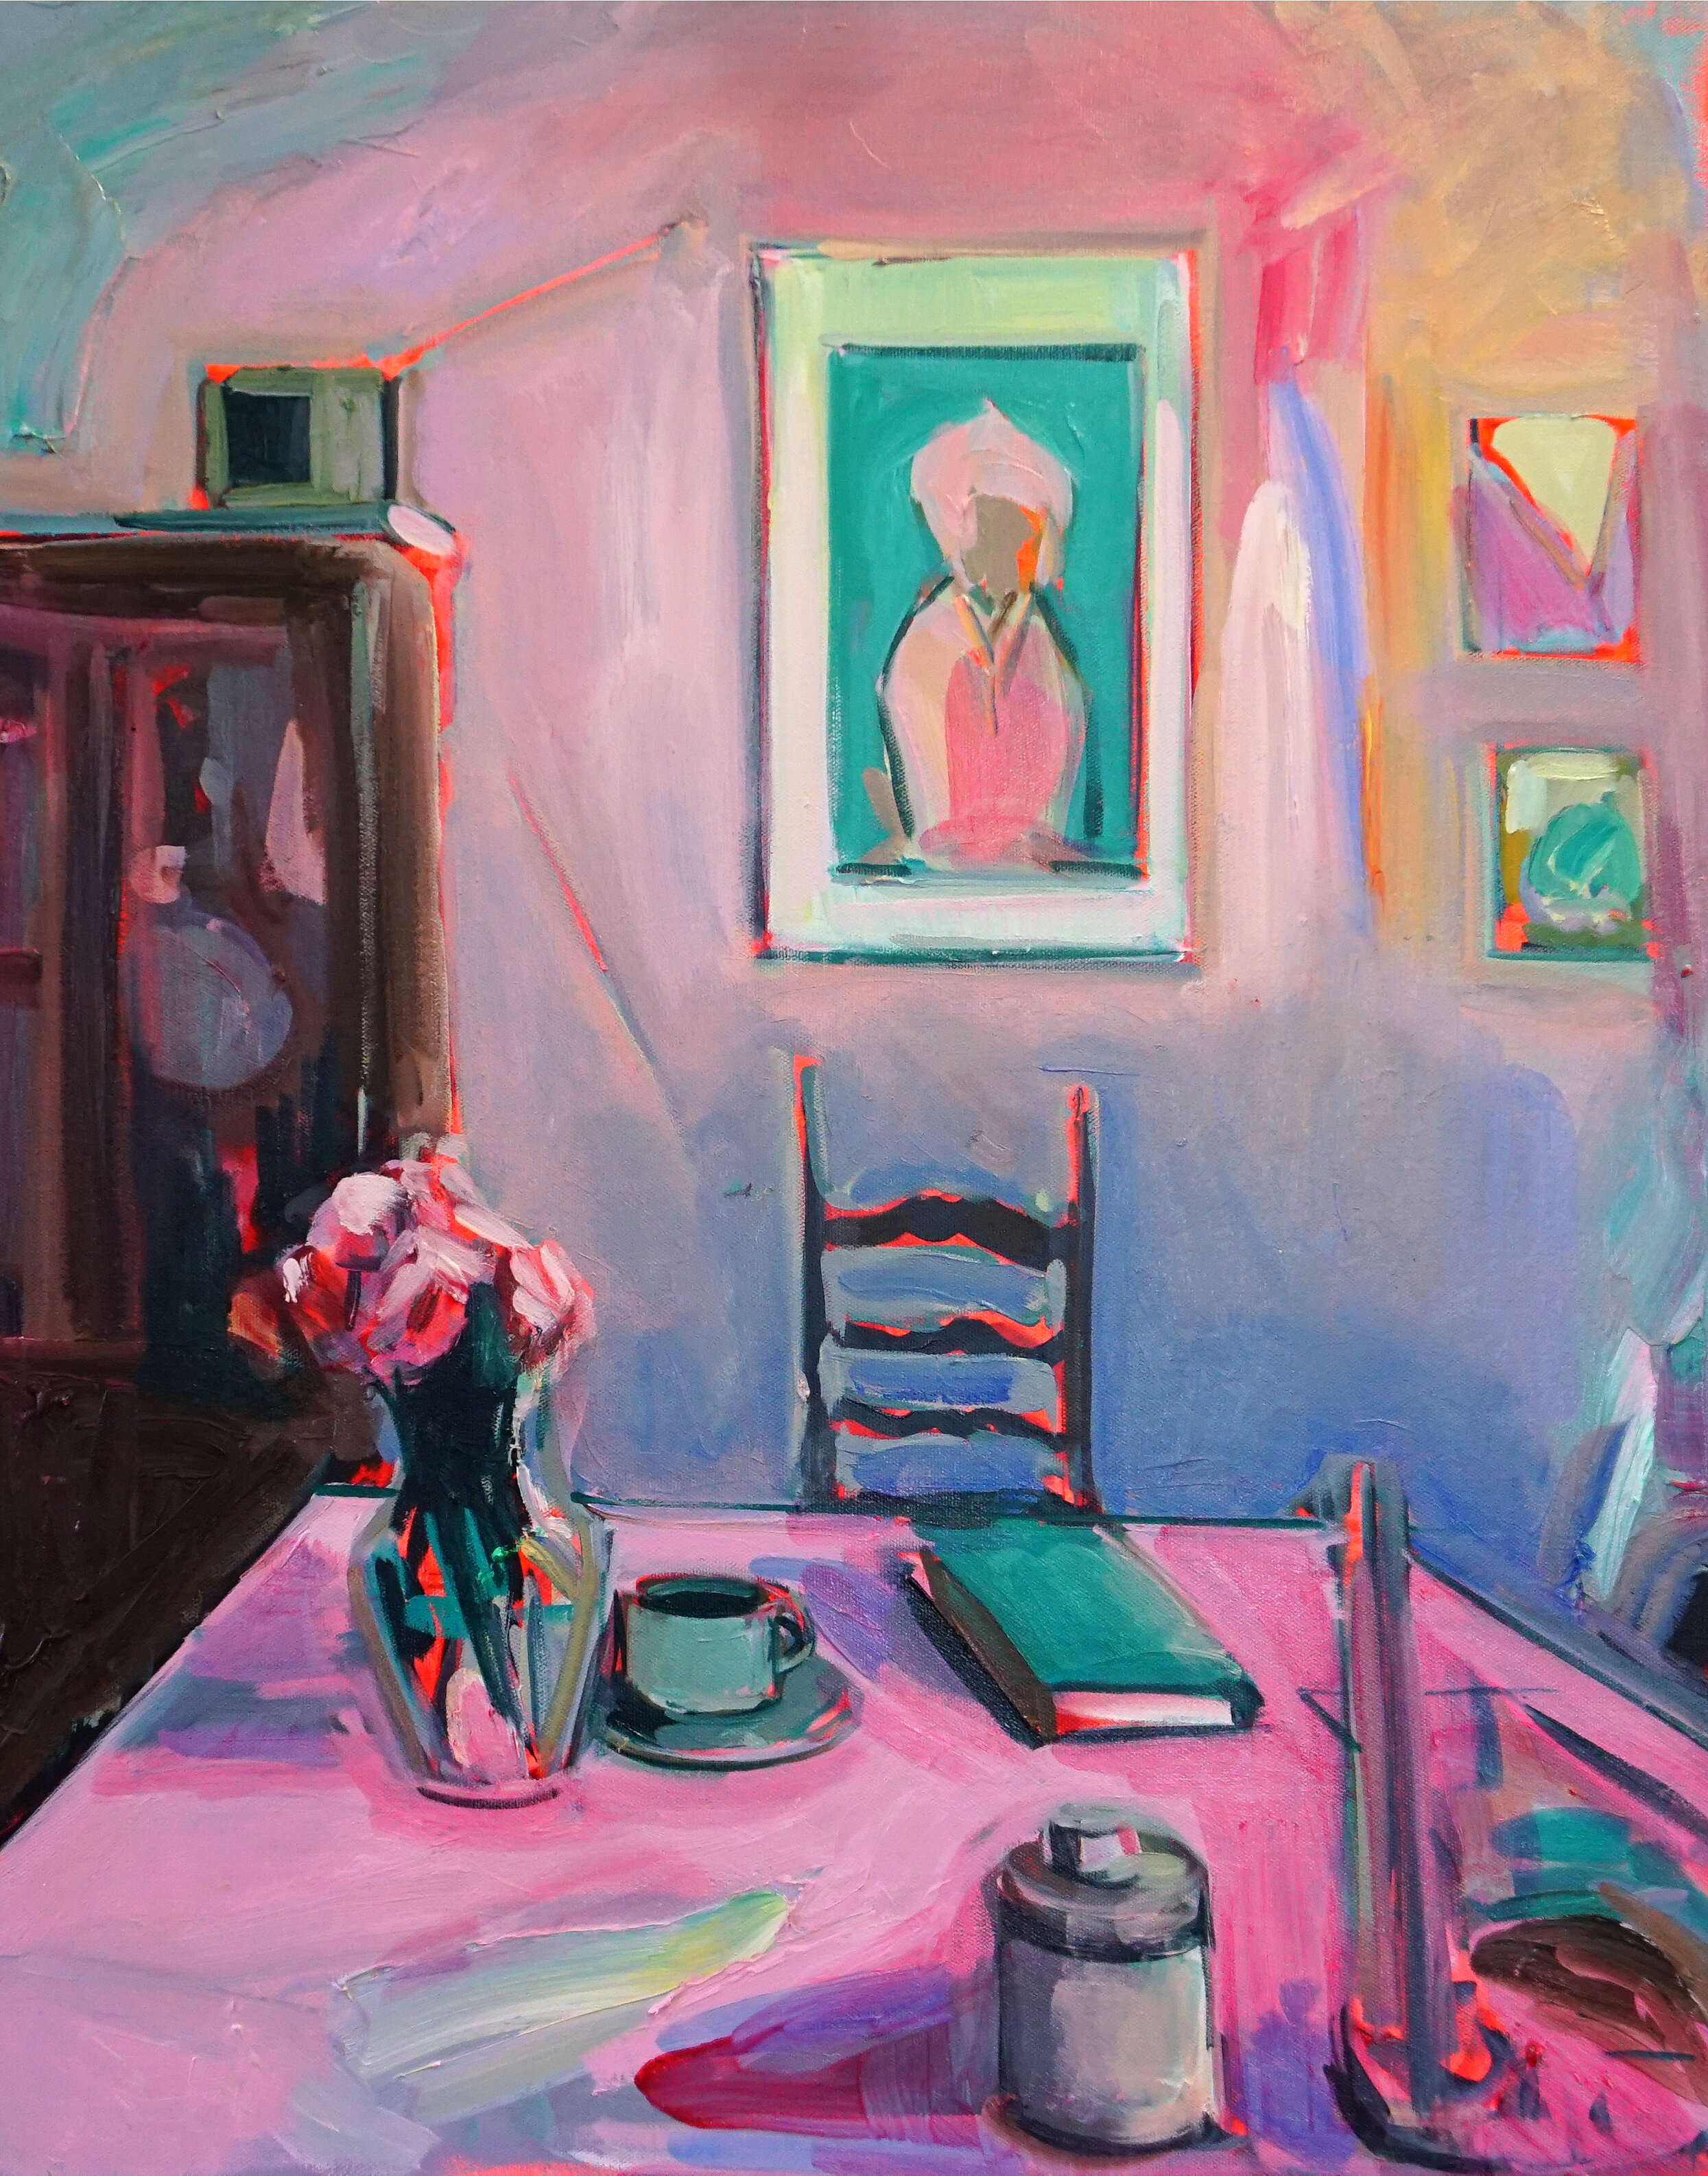  Ekaterina Popova  - Coffee with You -  2019, Oil on canvas - 30 x 24 x 2 inches / 76 x 61 x 5 cm 